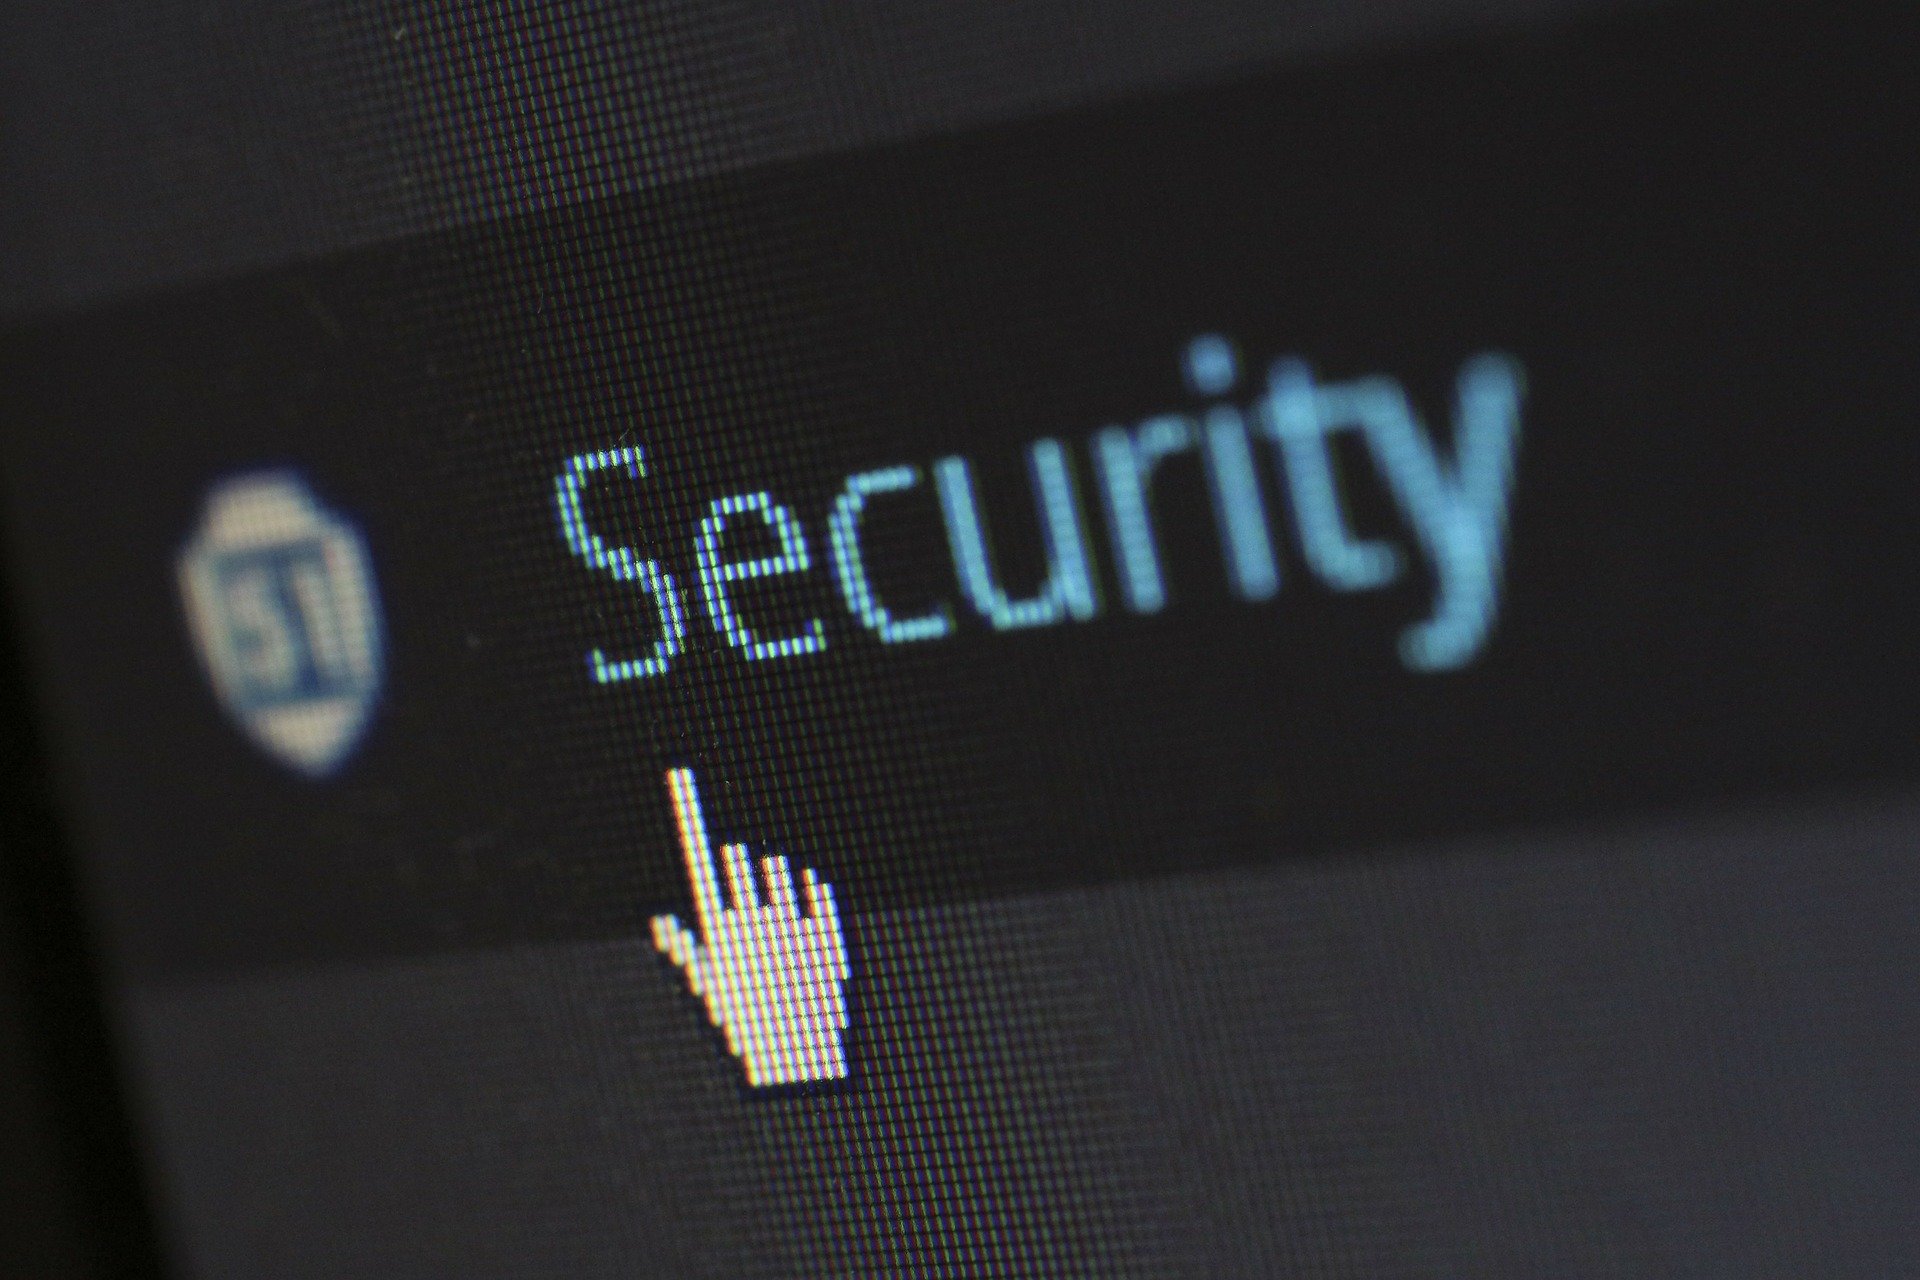 WordPressで最低限やっておくべき4つのセキュリティ対策